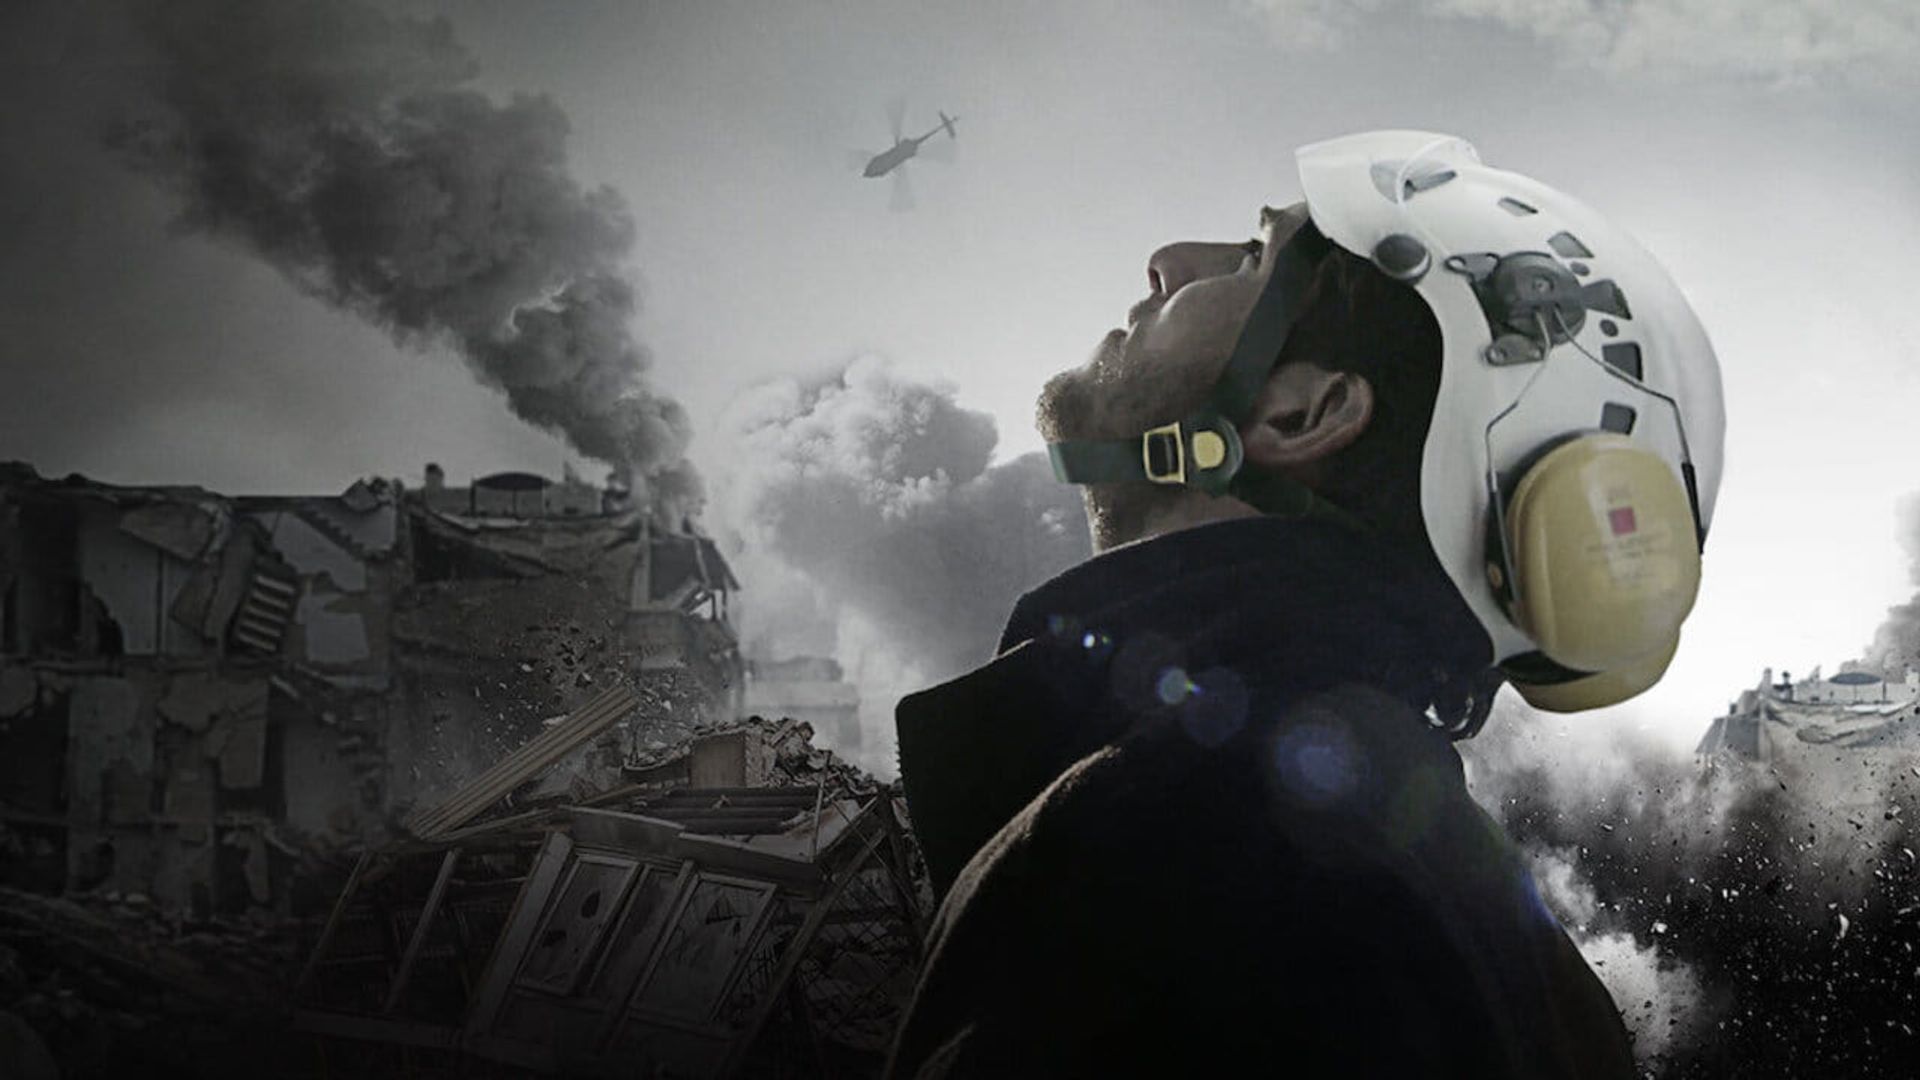 The White Helmets background